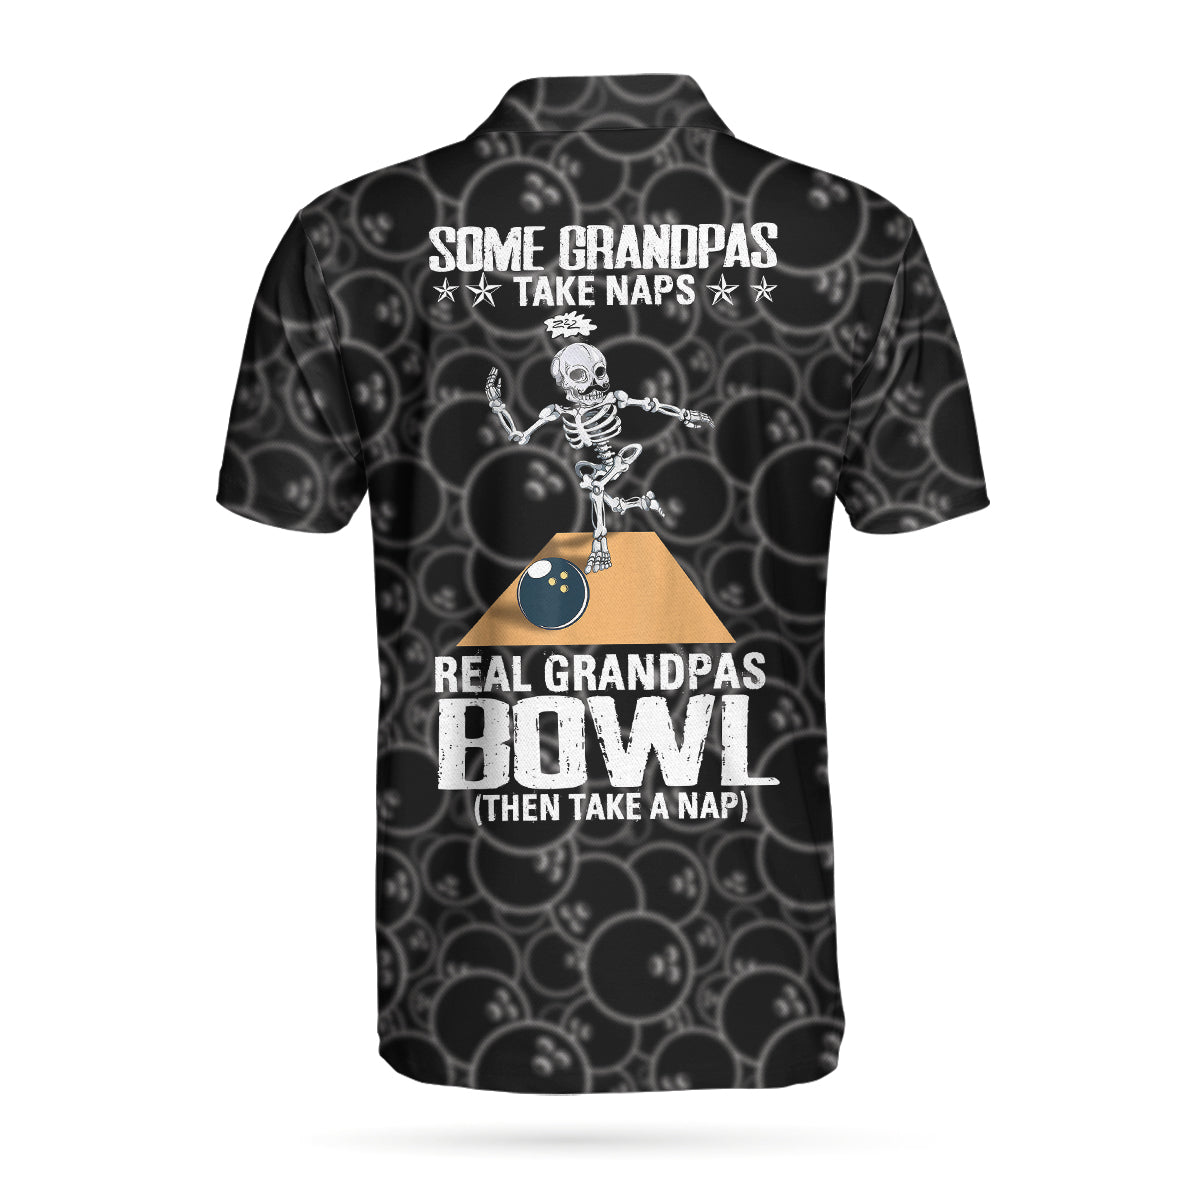 Real Grandpas Bowl Polo Shirt/ Black Ball Pattern Bowling Polo Shirt/ Funny Bowling Shirt With Sayings Coolspod